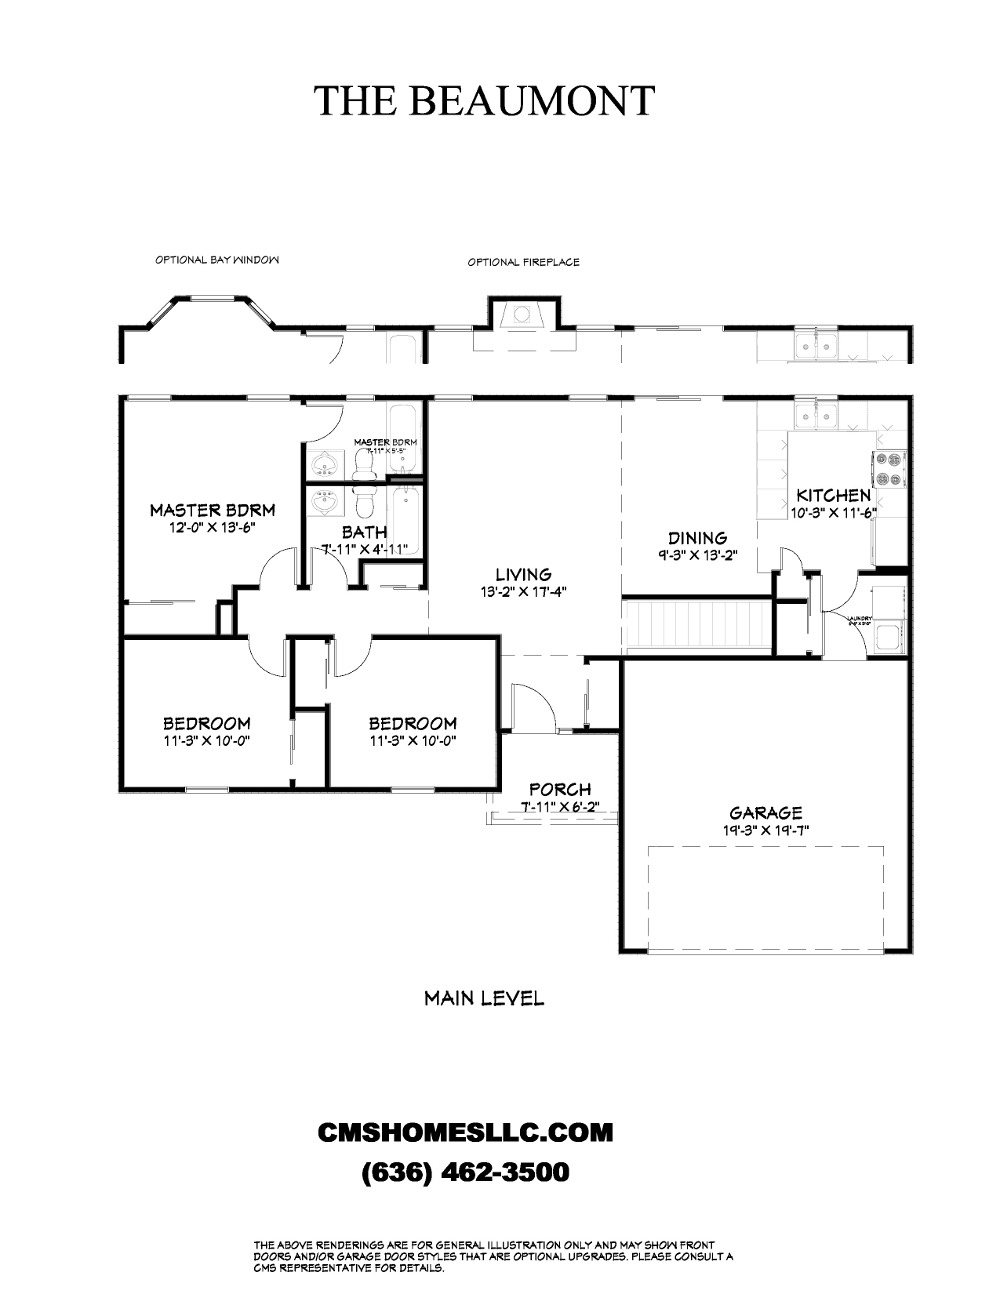 Beaumont Floor plan 7.14.16 CMS Homes